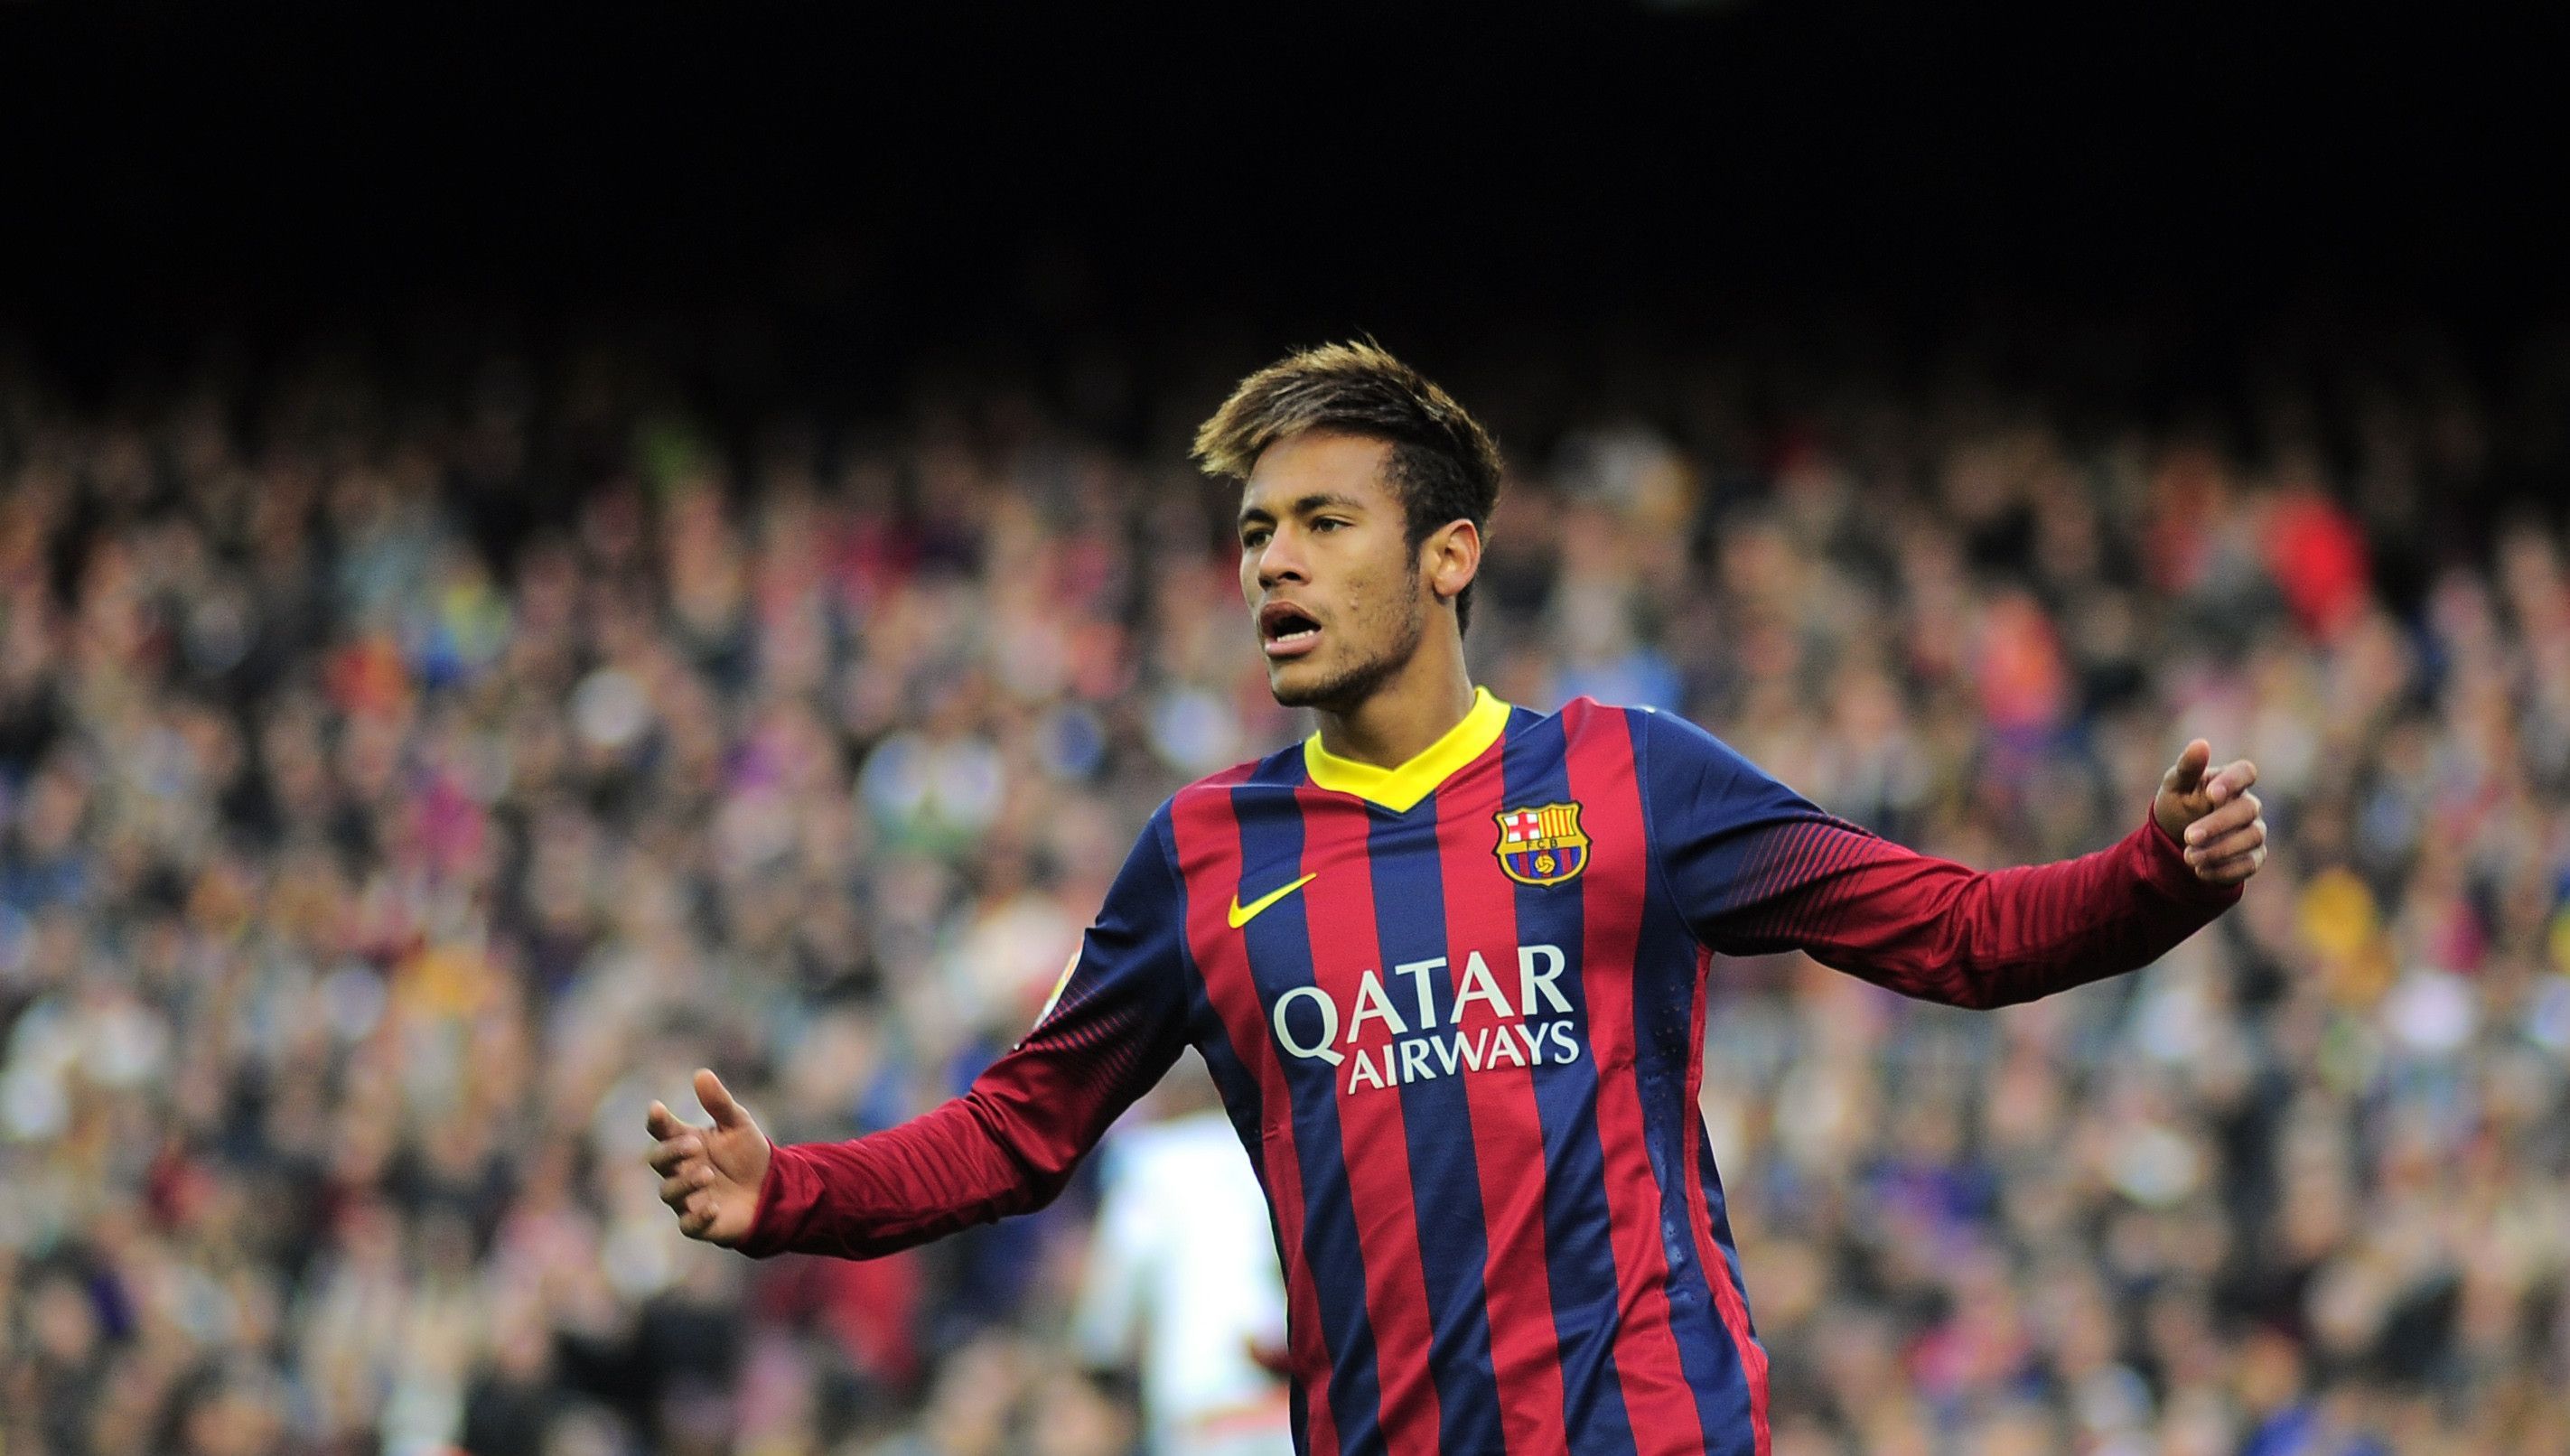 Neymar Hd Wallpapers 1080p Neymar Jr Barcelona 2845x1612 Wallpaper Teahub Io